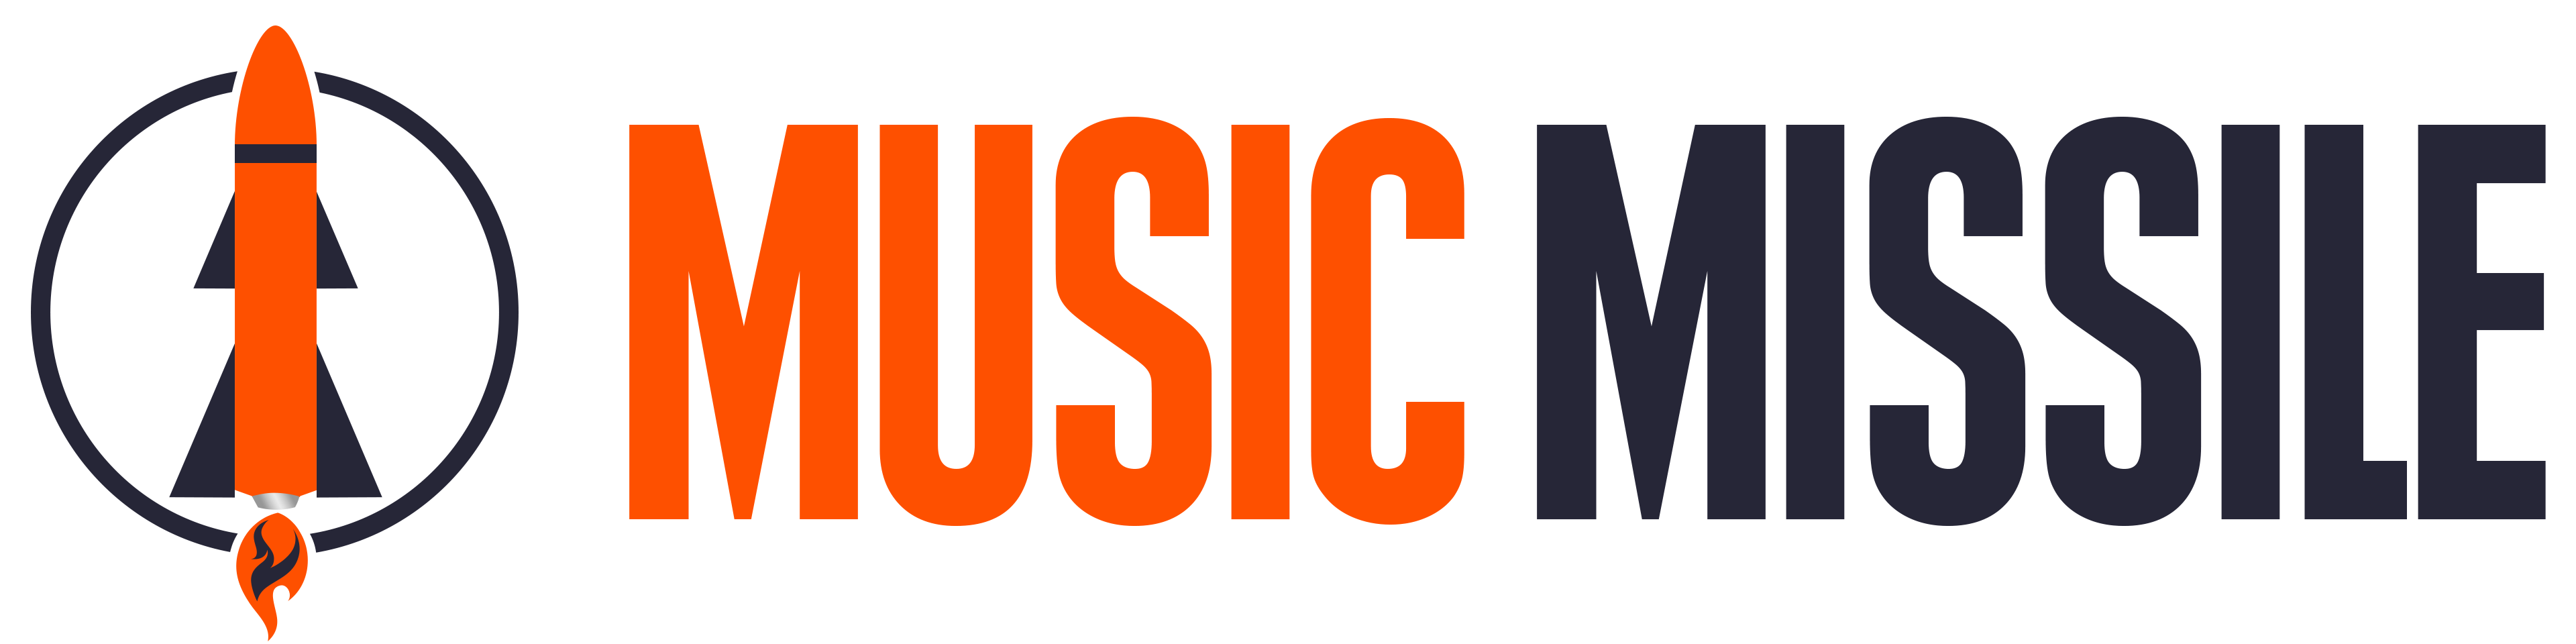 MusicMissile